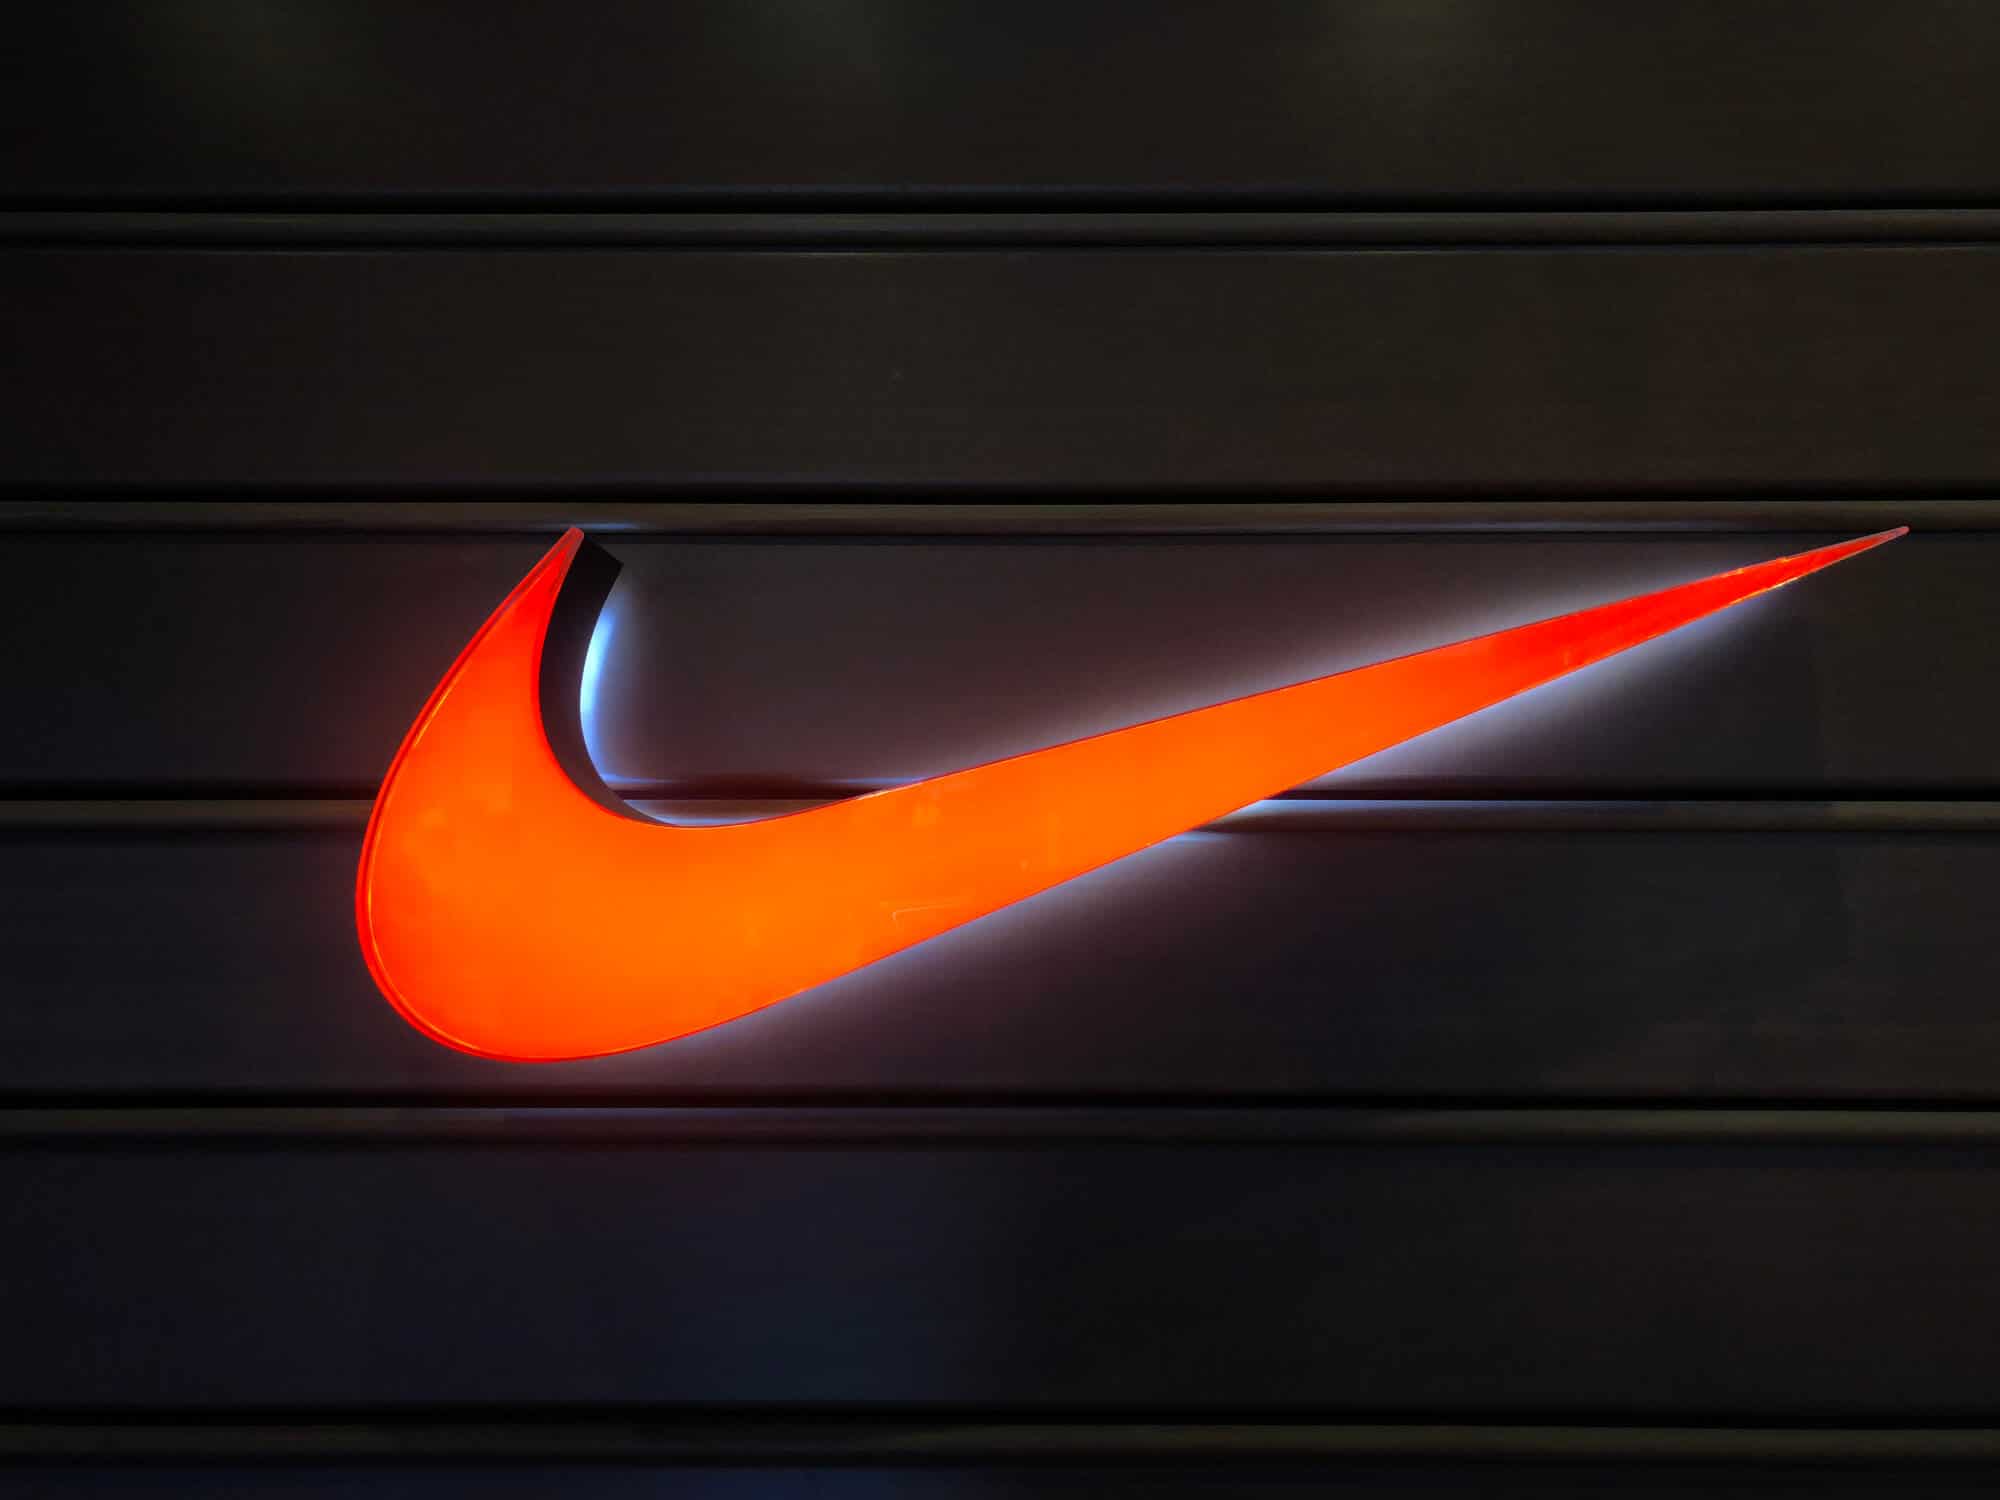 nike vs puma running shoes:Nike neon sign